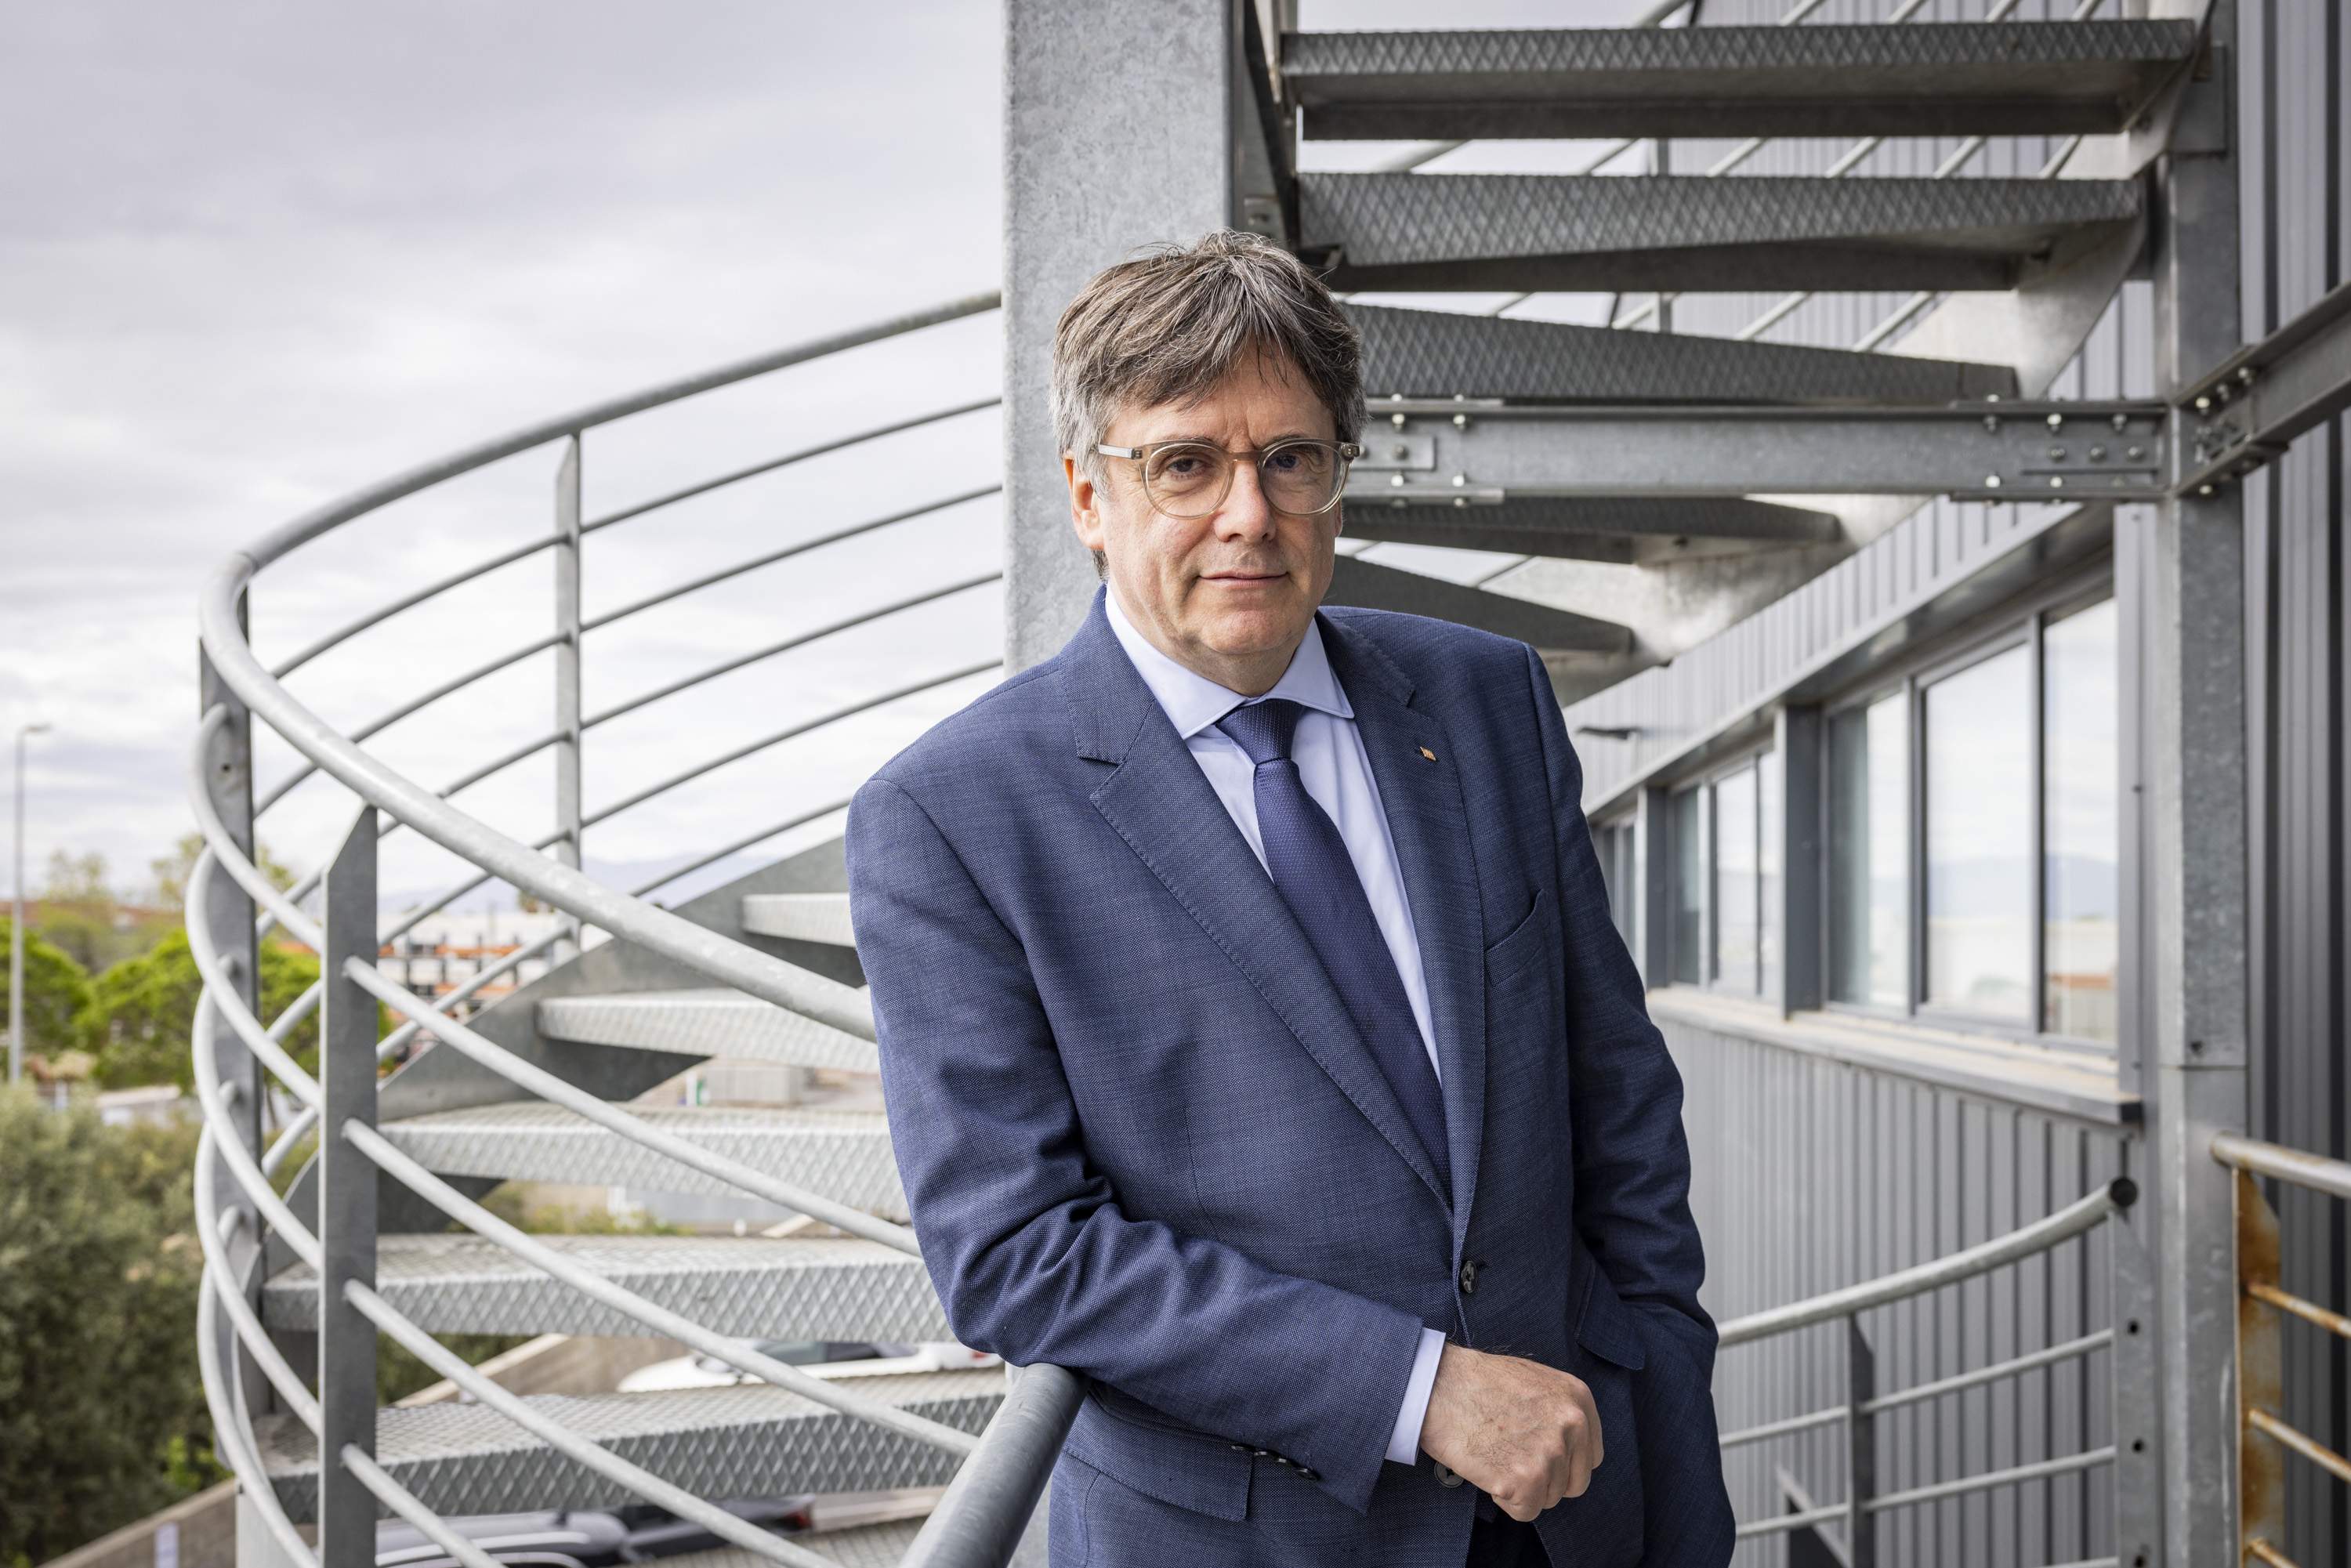 Entrevista Carles Puigdemont, candidat eleccions catalunya per junts / Foto: Carlos Baglietto